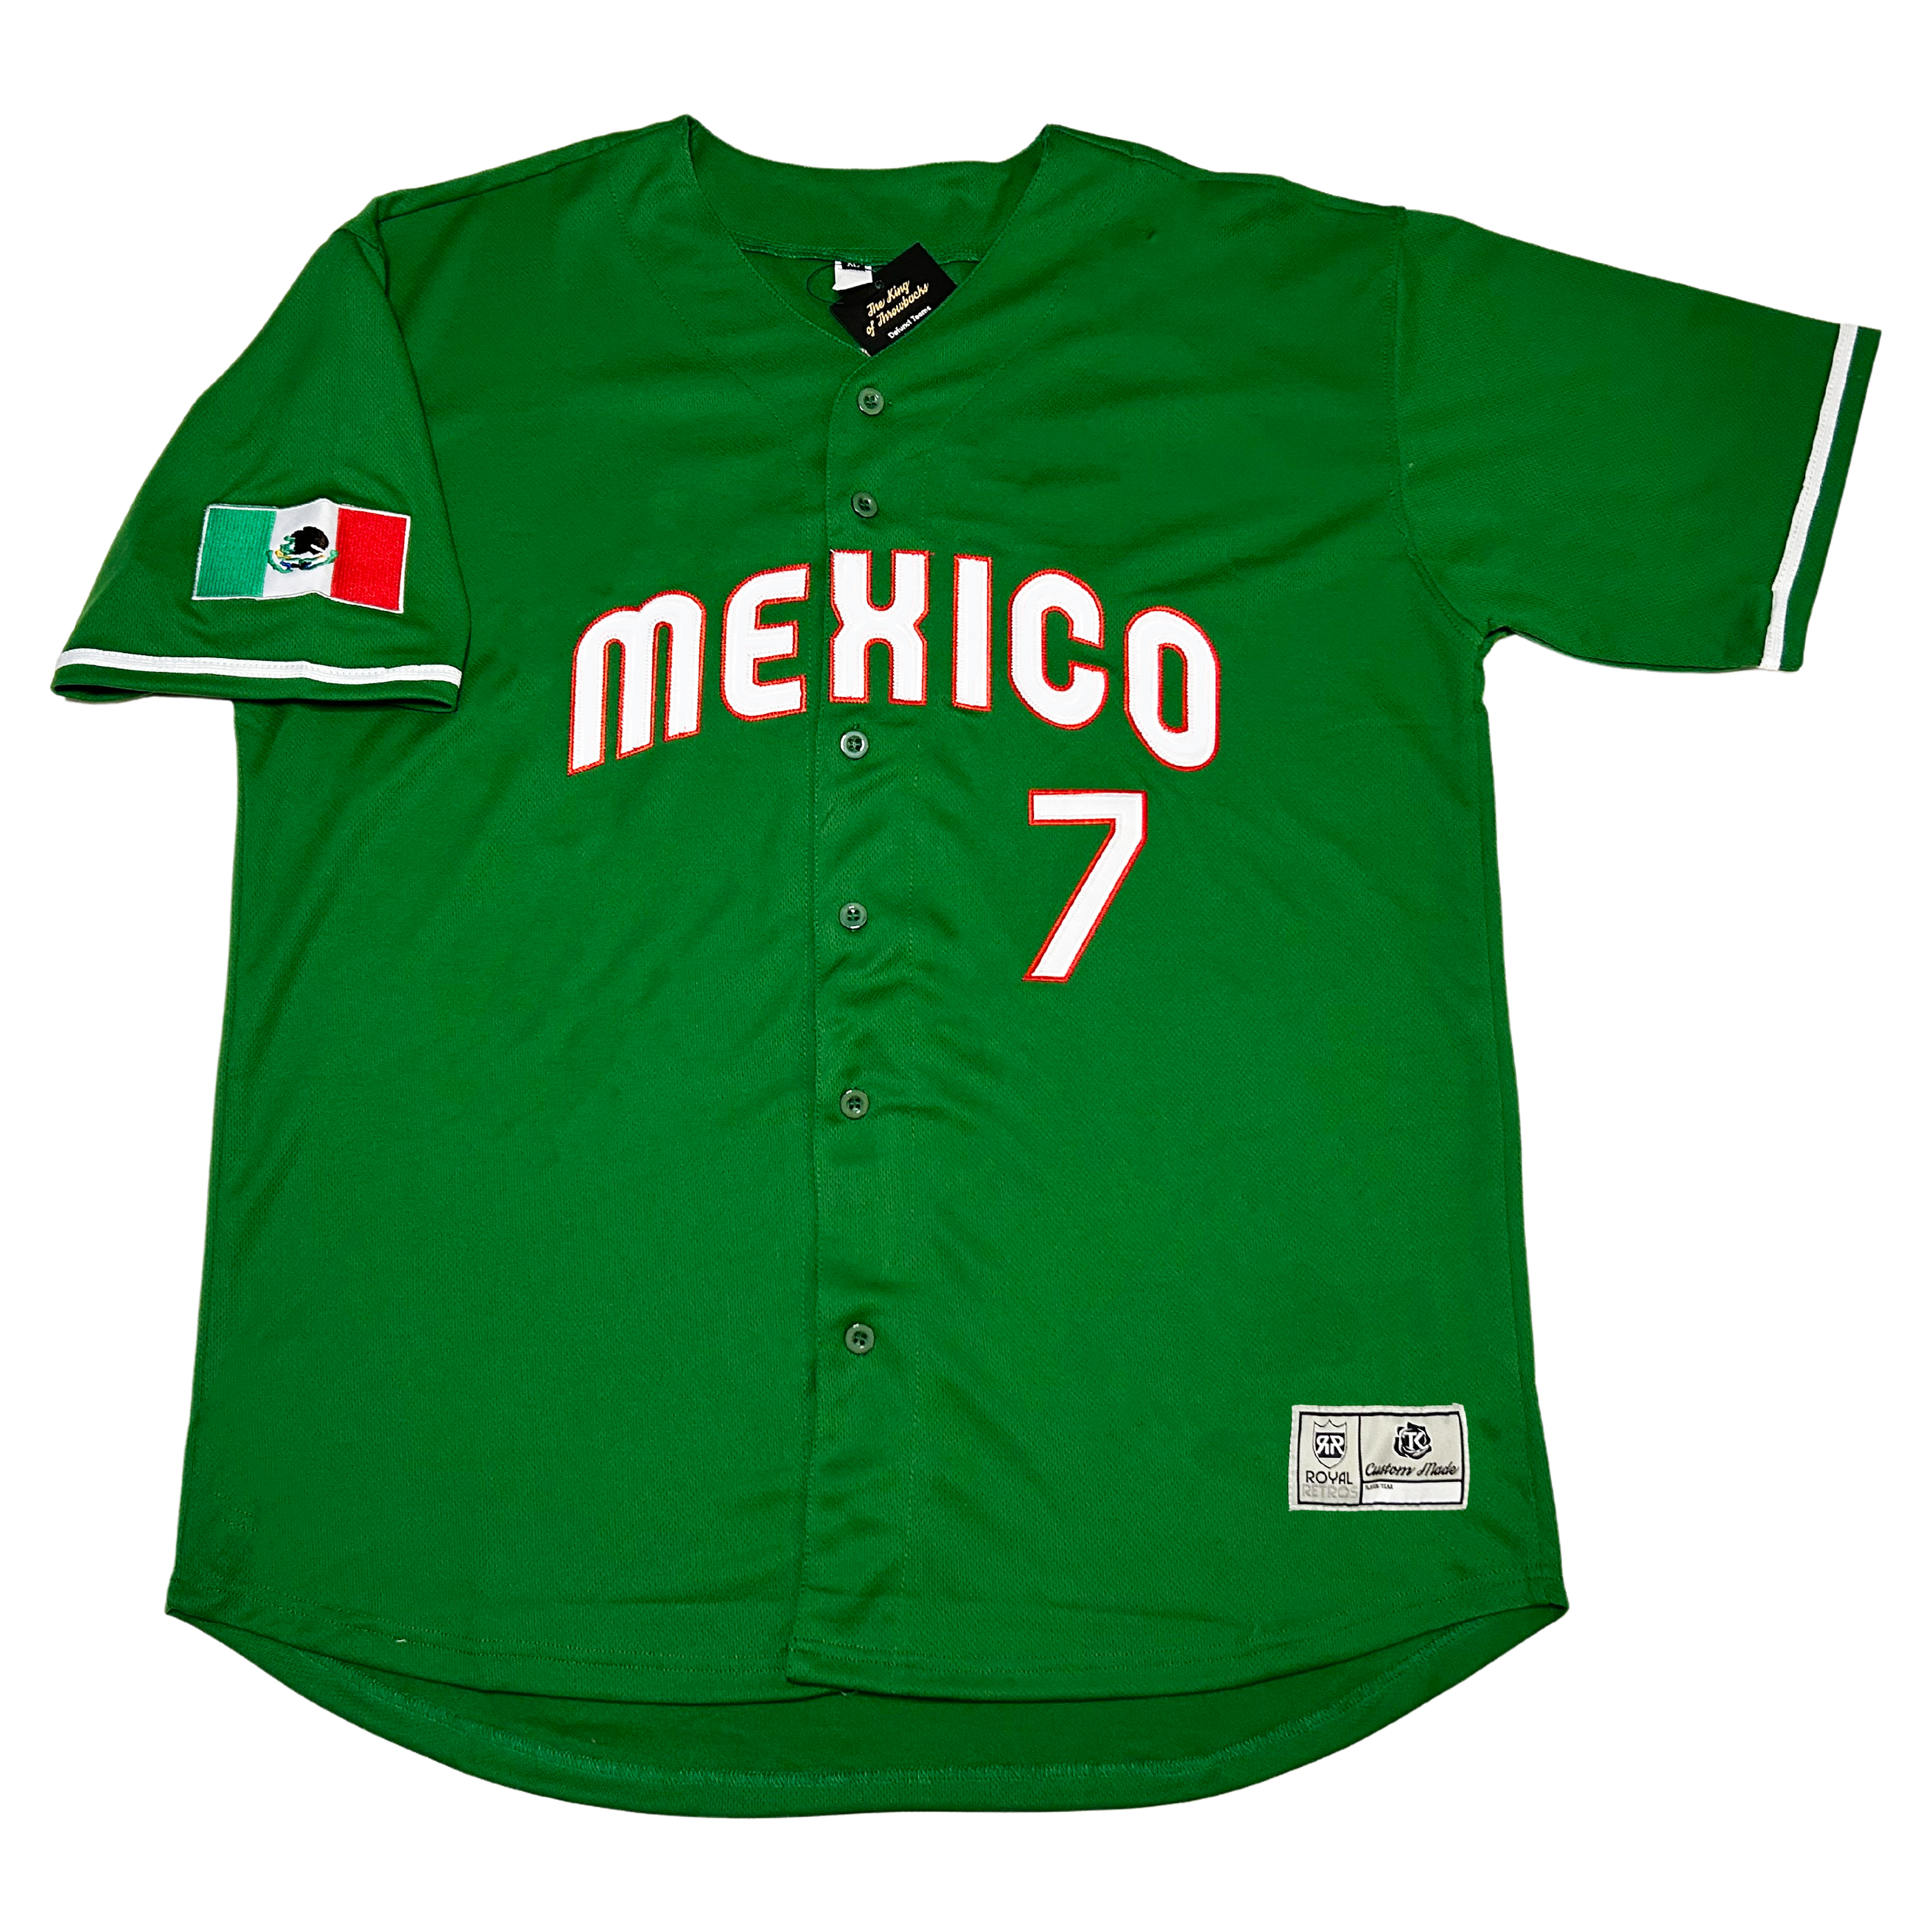 wbc mexico baseball jersey